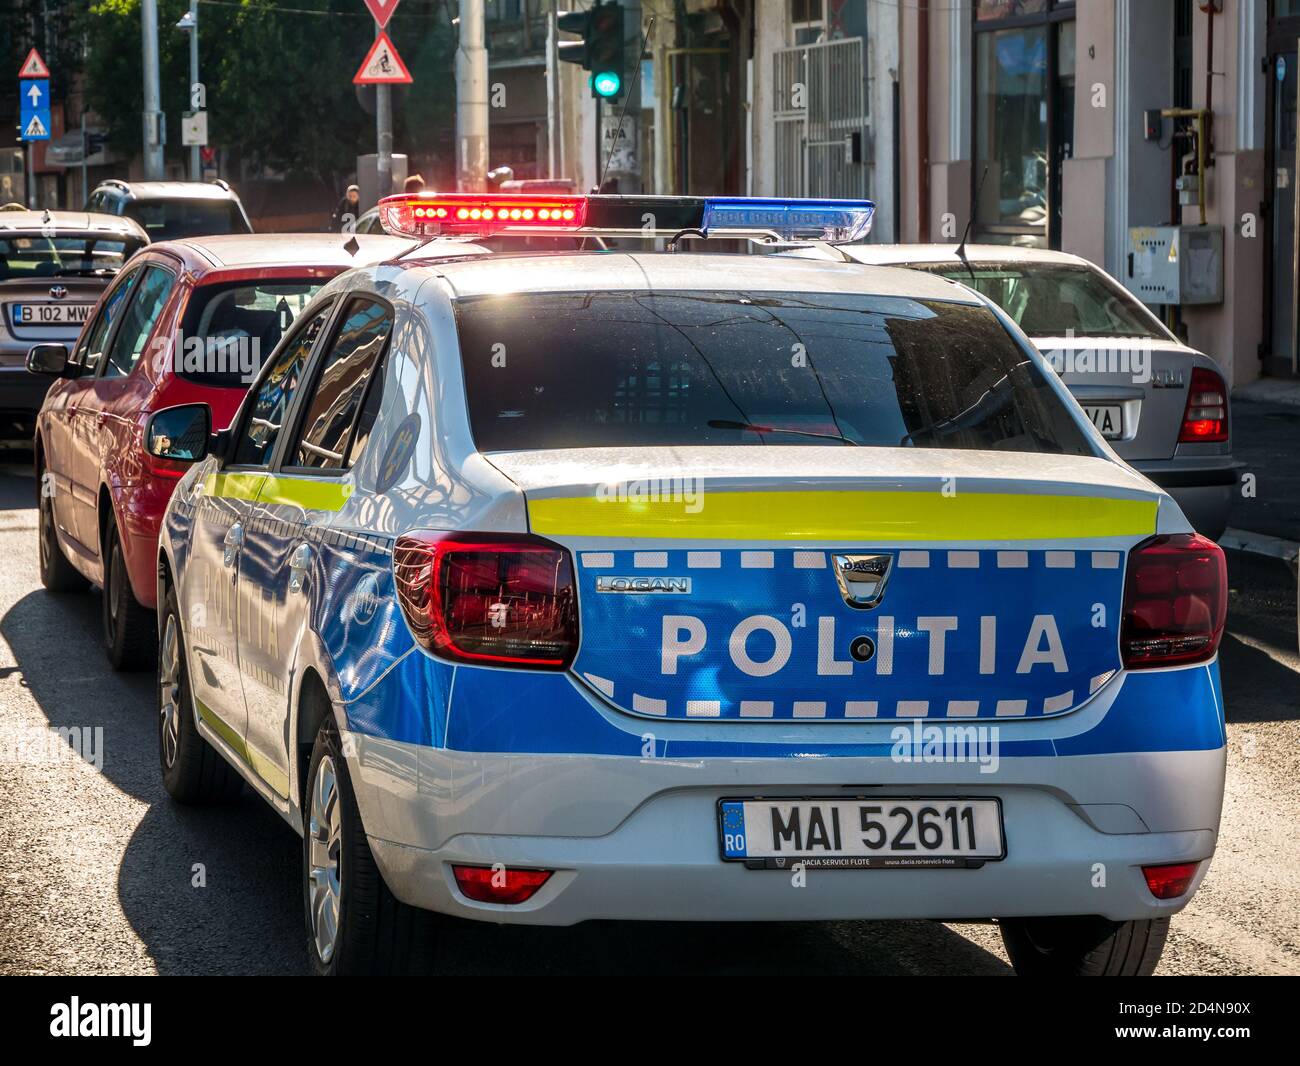 Bucharest/Romania - 09.27.2020: Romanian police car in traffic Stock Photo  - Alamy